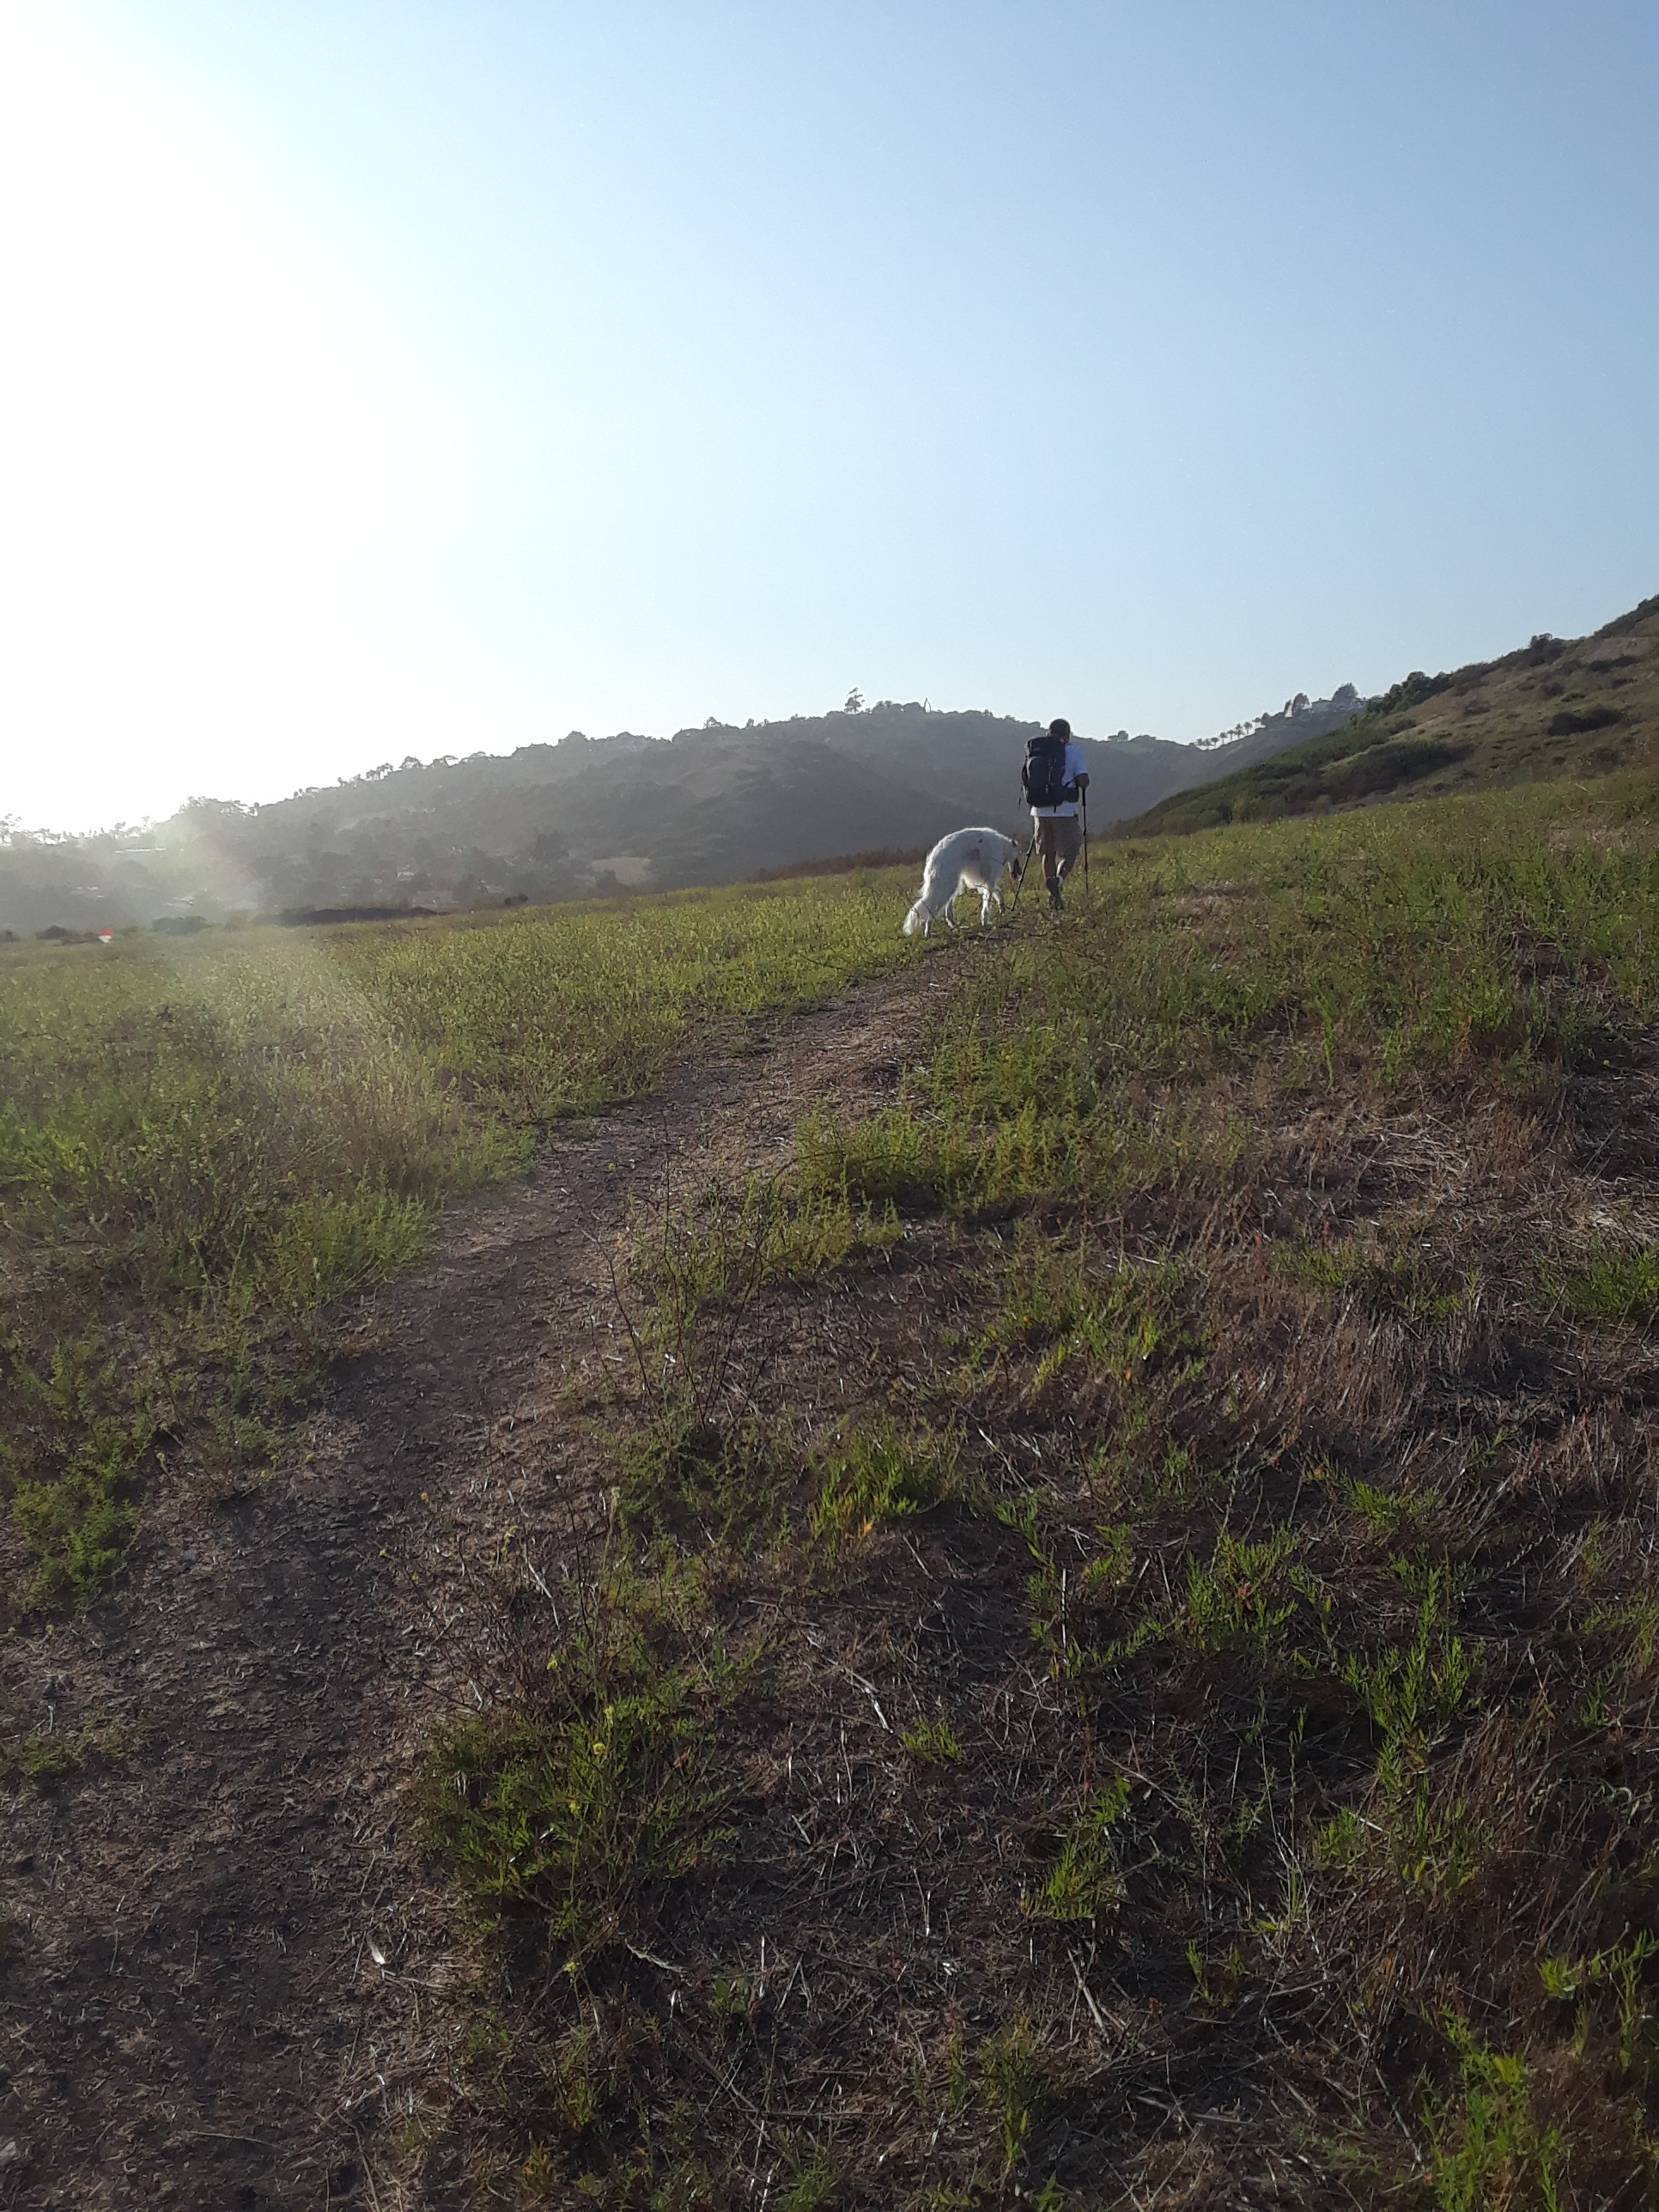  Walking the Santa Barbara hills with trekking poles.&nbsp; 